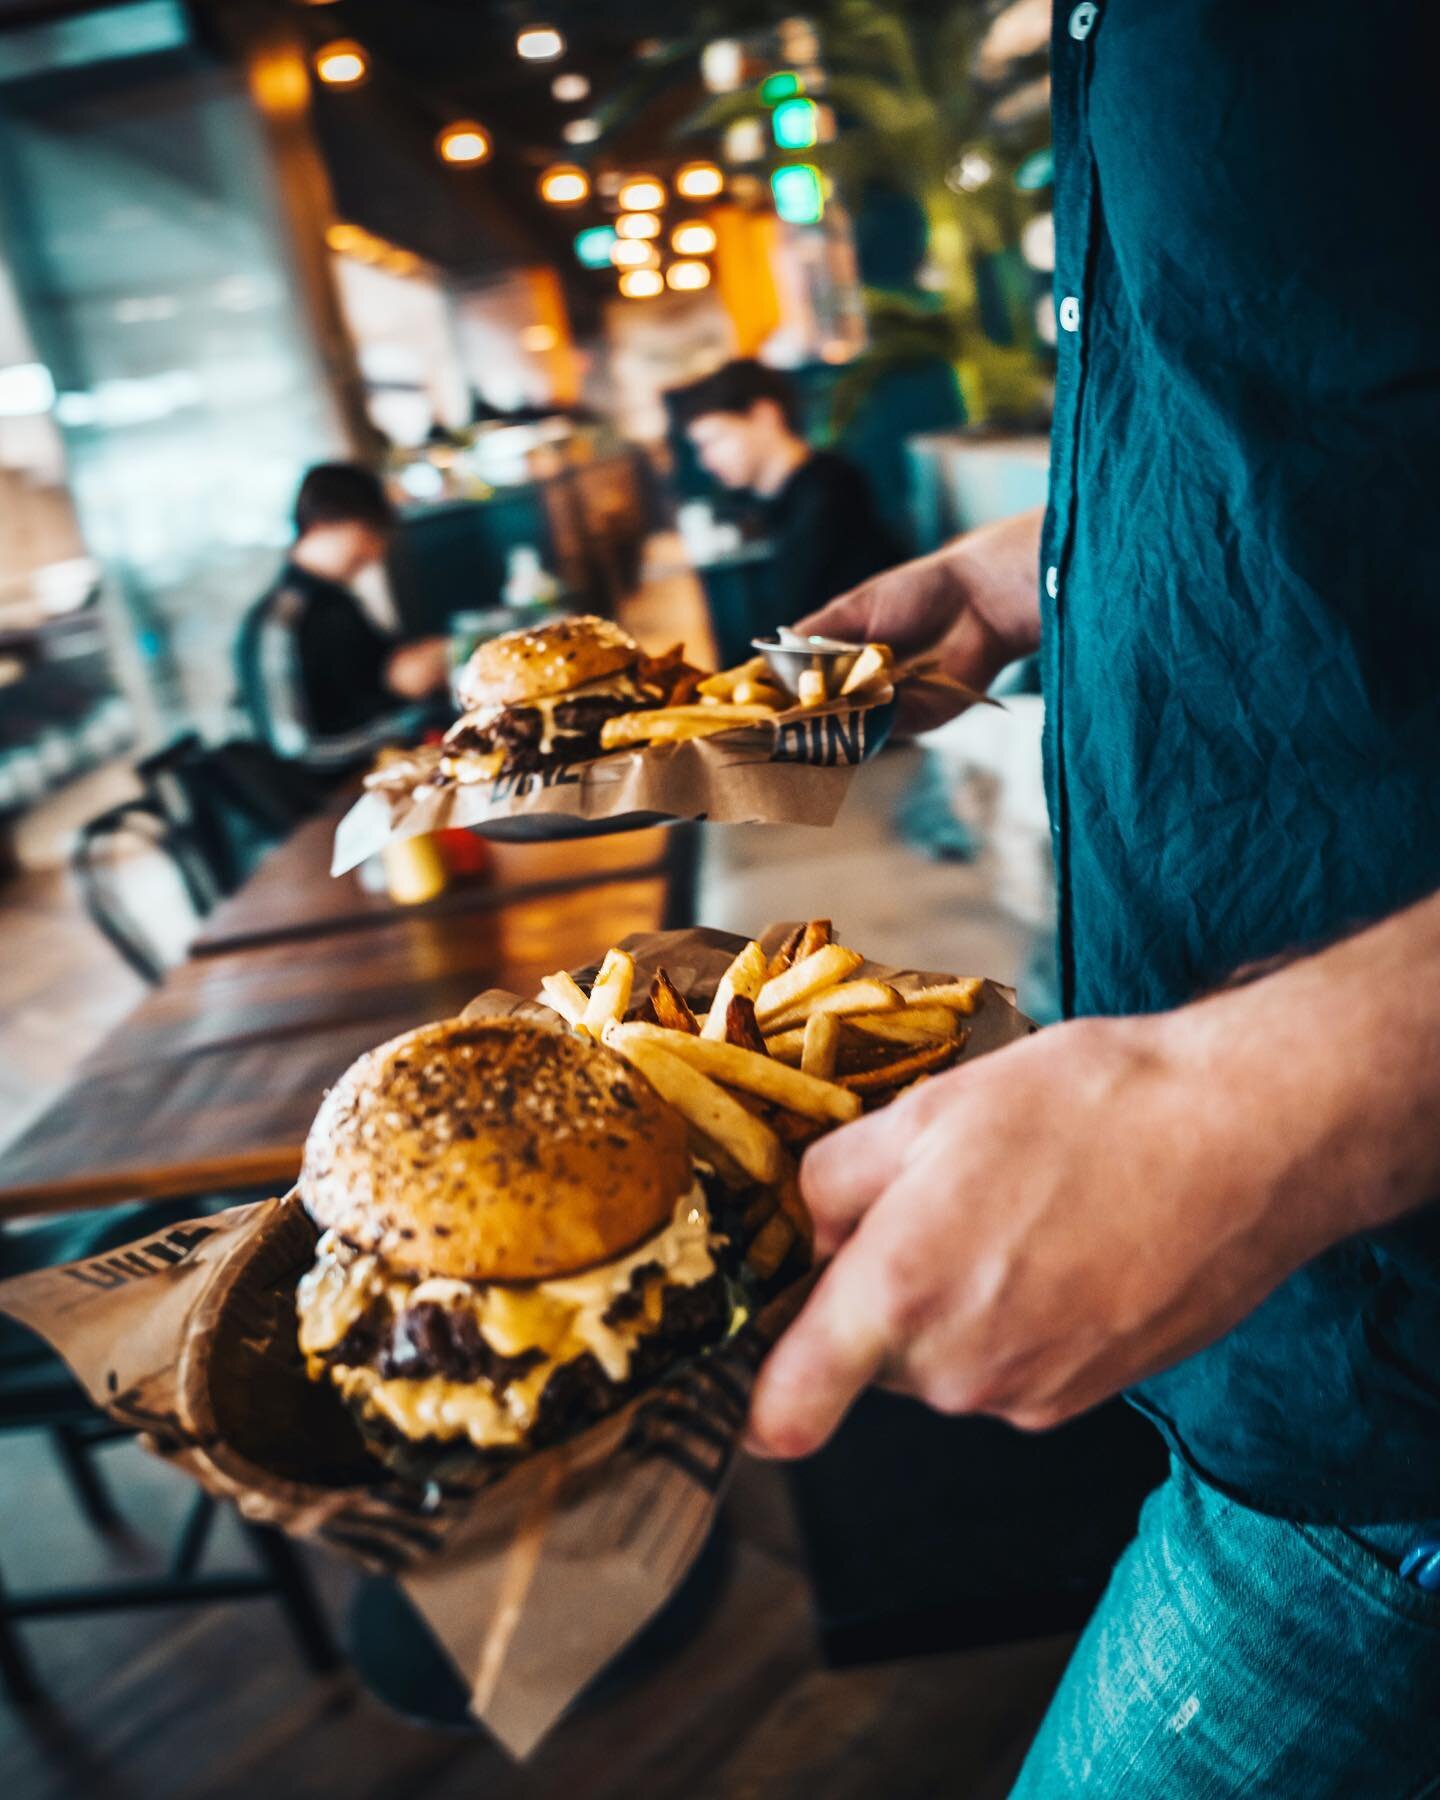 Orkar man verkligen laga mat en regnig söndag? 😉 Kom förbi så fixar vi söndagsmaten! 💁&zwj;♂️🍔
&bull;
&bull;
&bull;
#dineburgers #dine #göteborg #kungsbacka #örebro #helsingborg #svensktkött #svensktkott #burger #burgers #hamburger #hamburg